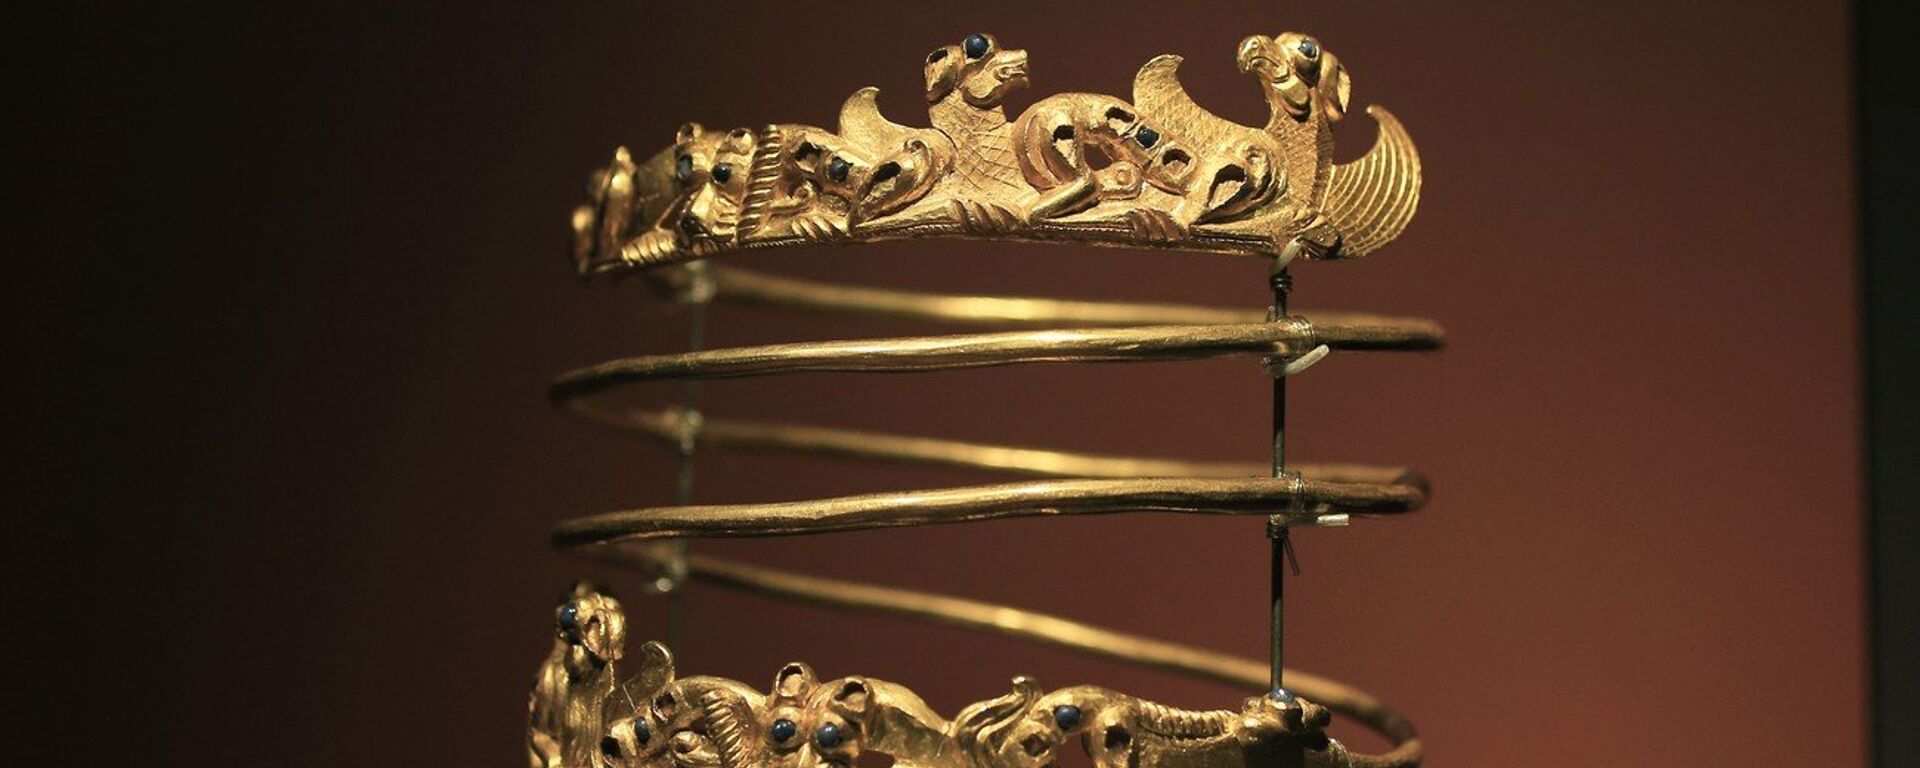 A Scythian gold helmet - Sputnik International, 1920, 27.10.2021